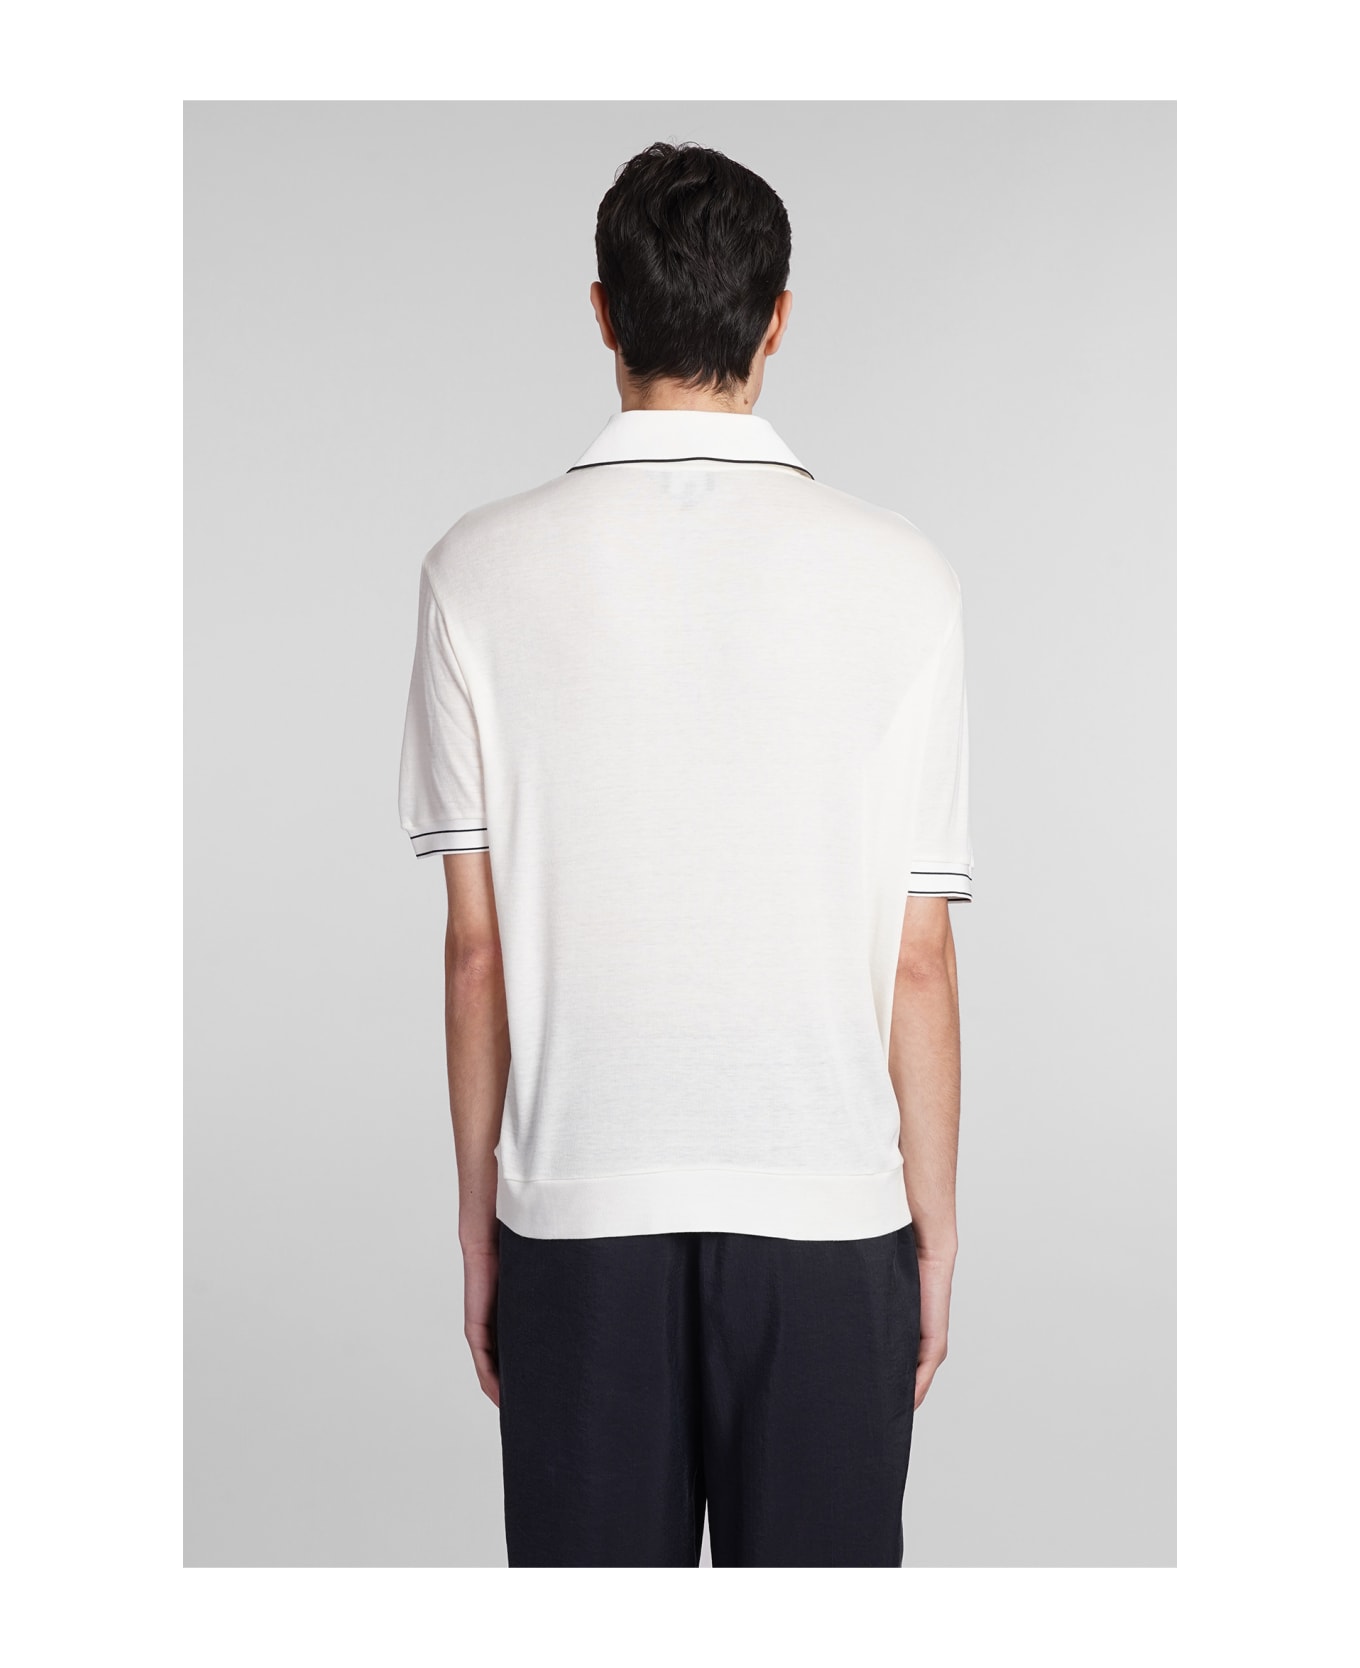 Giorgio Armani Wool And Viscose Blend Polo Shirt - GESSO